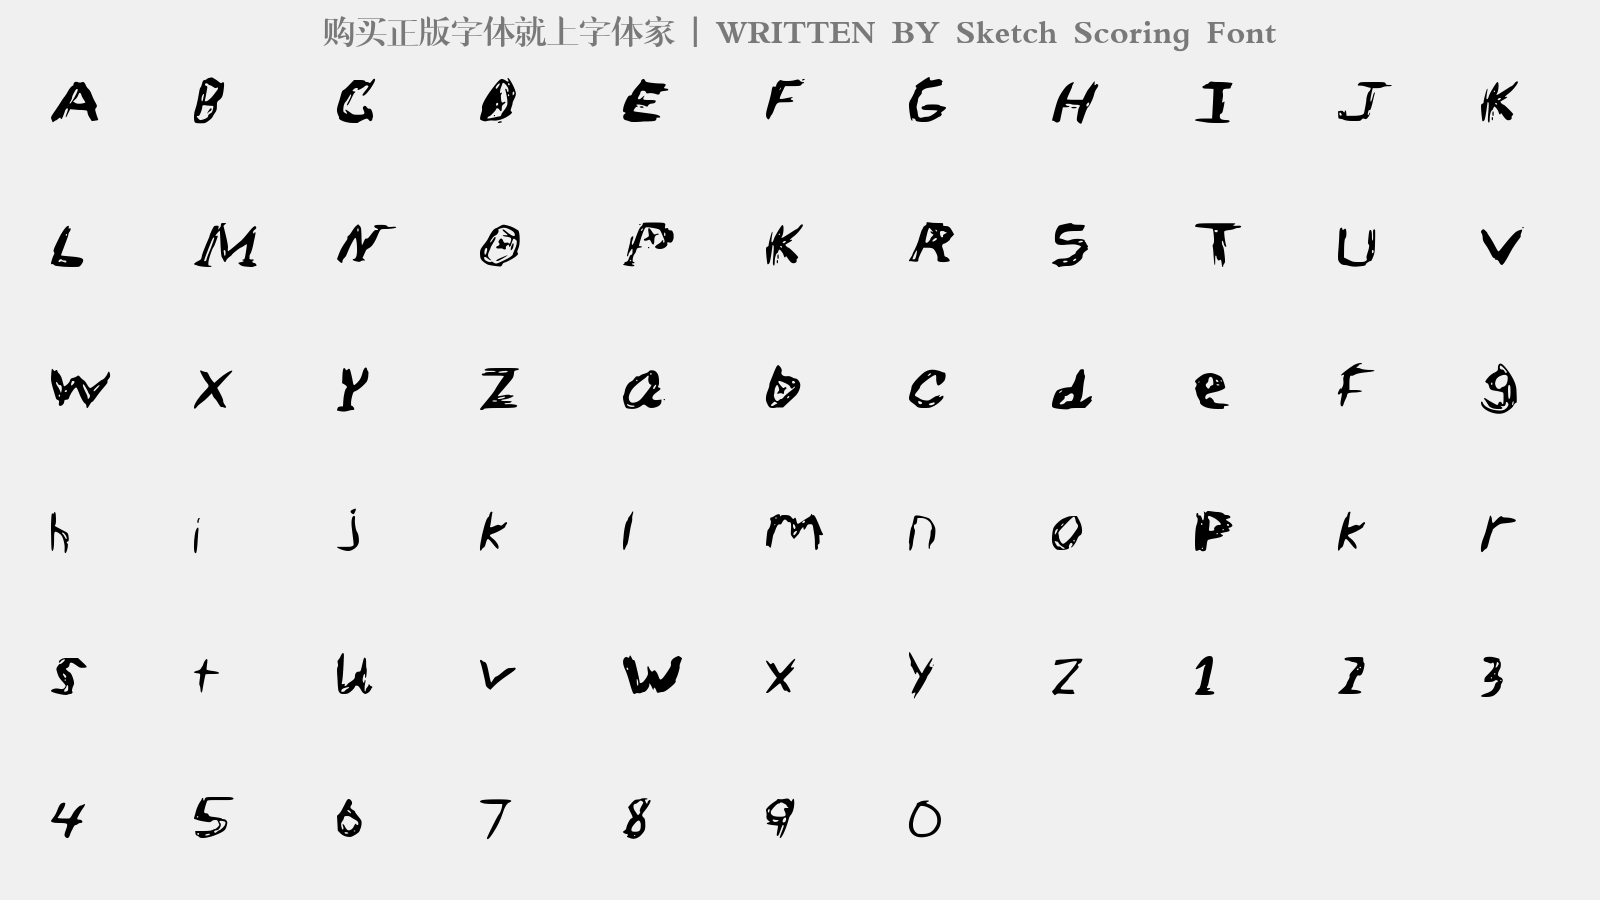 Sketch Scoring Font - 大写字母/小写字母/数字